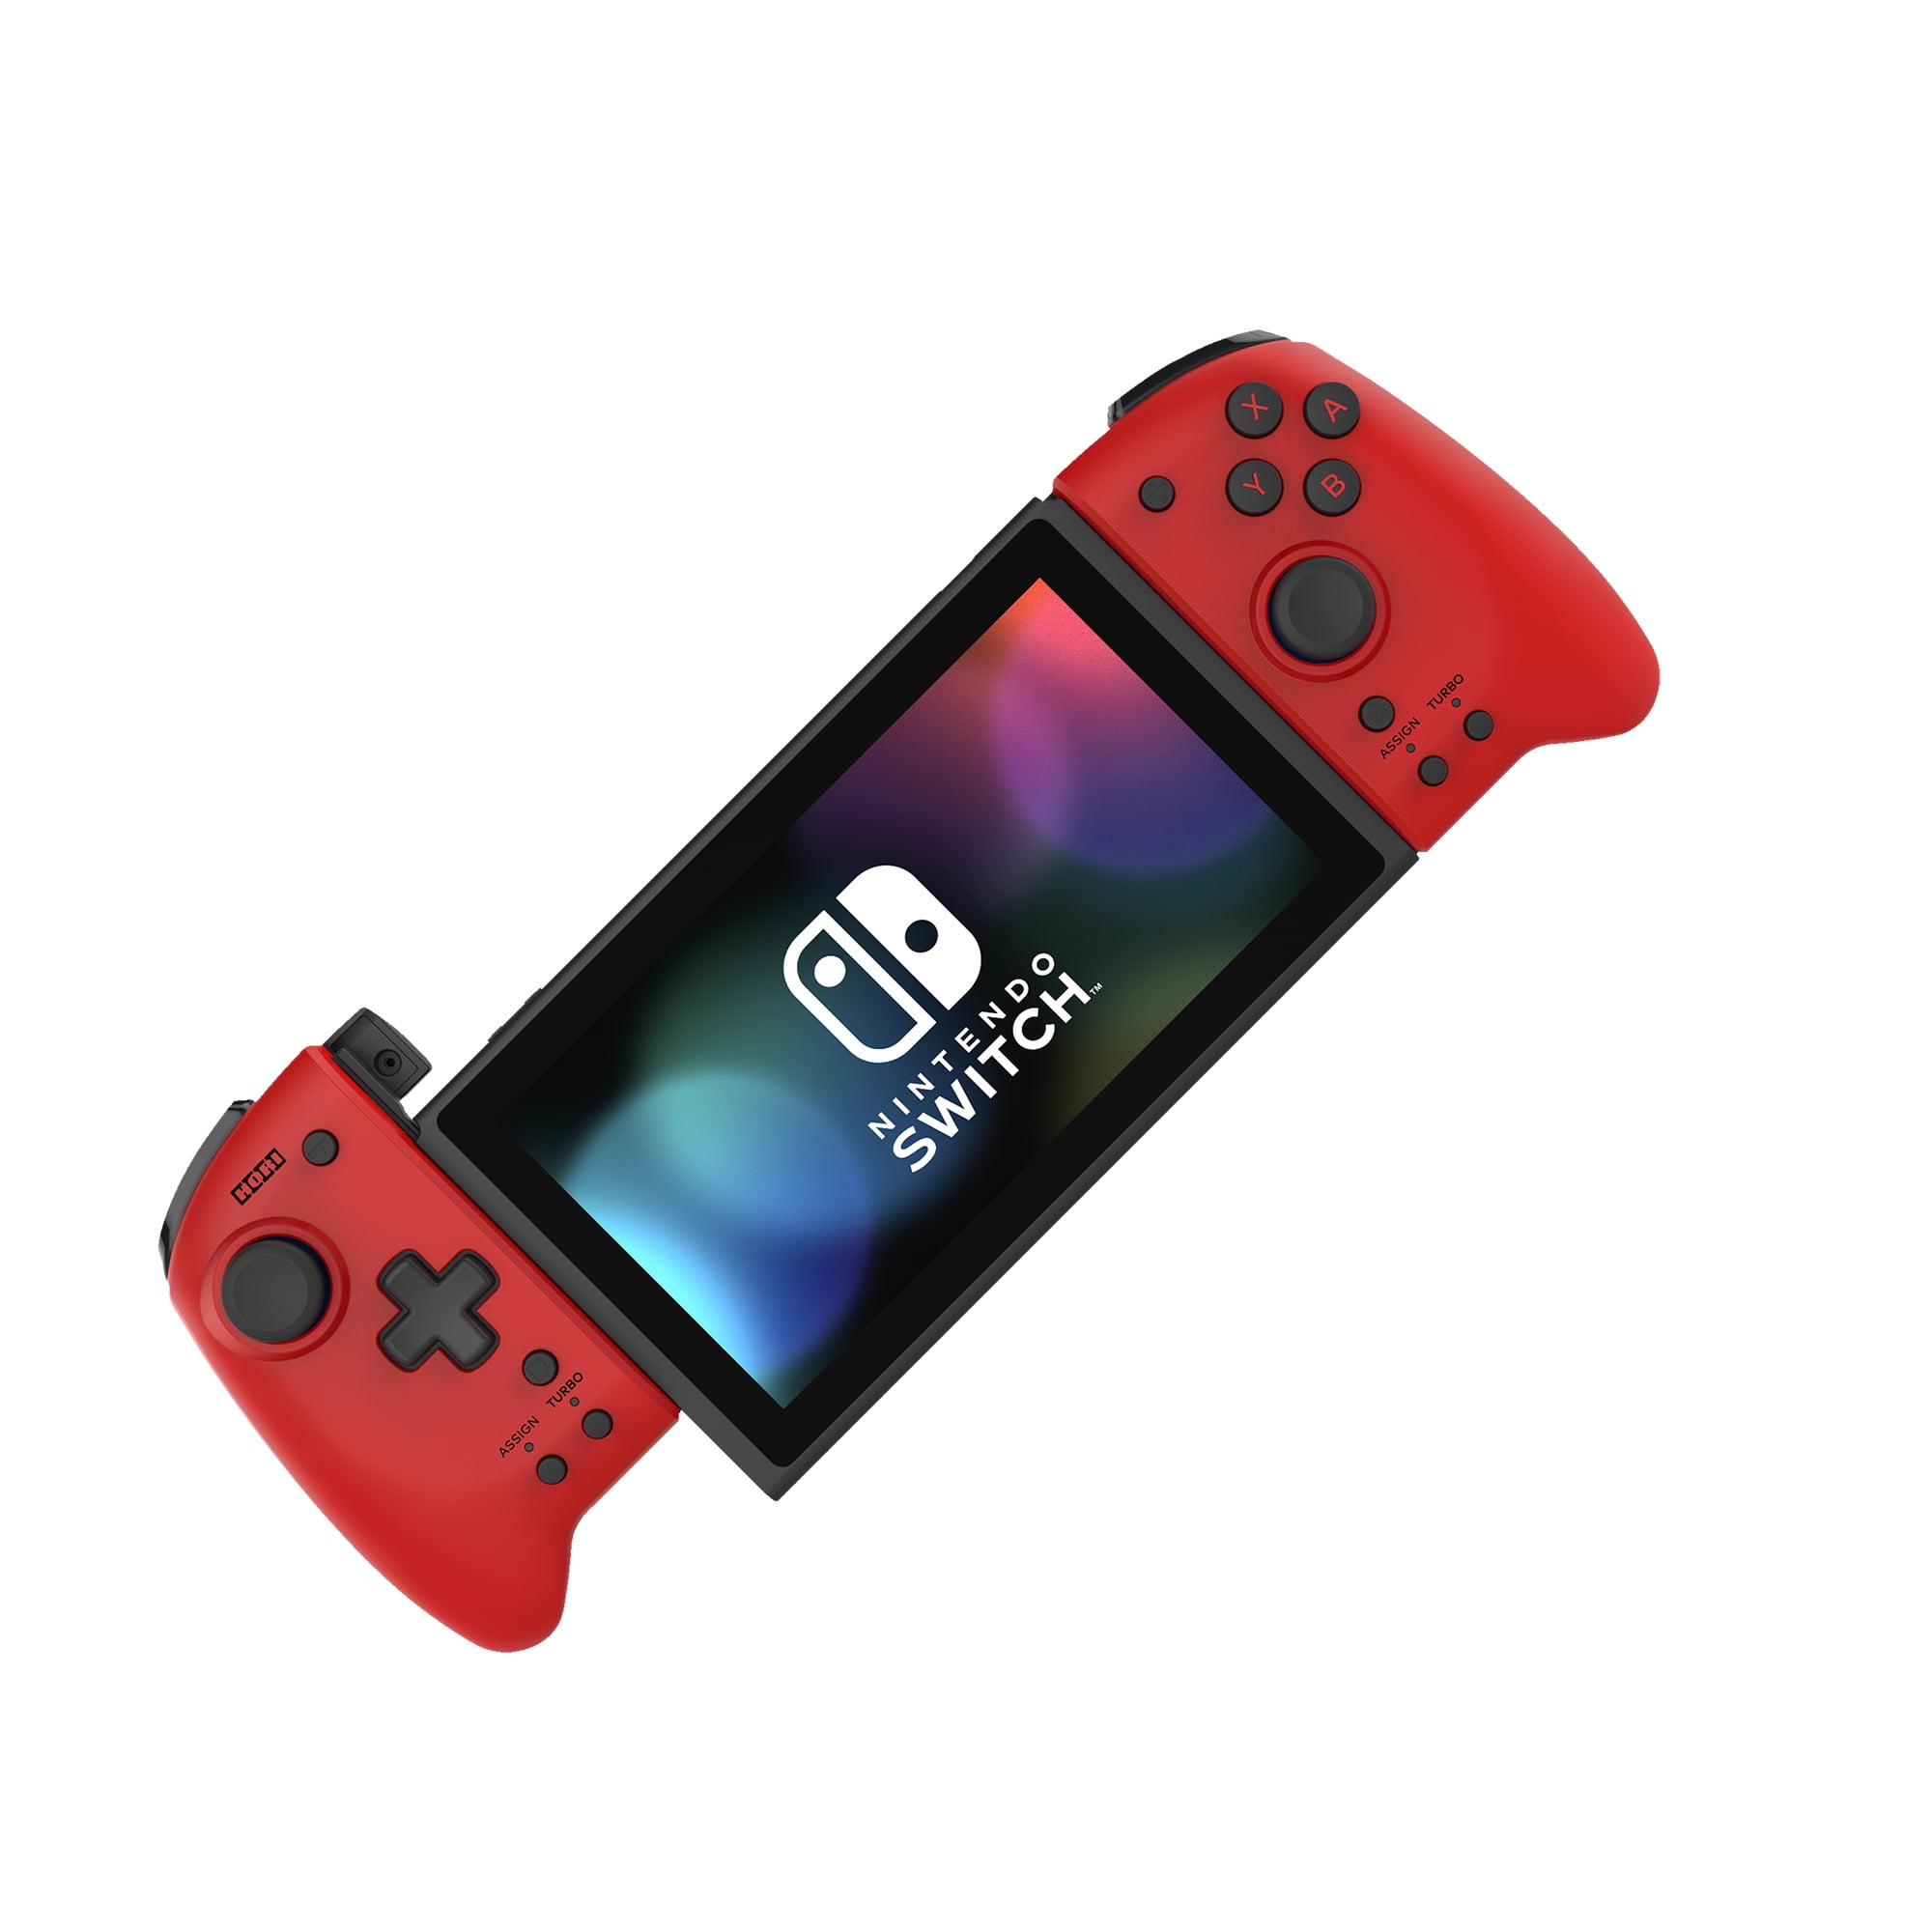 Nintendo Switch Split Pad Pro (Green) Ergonomic Controller for